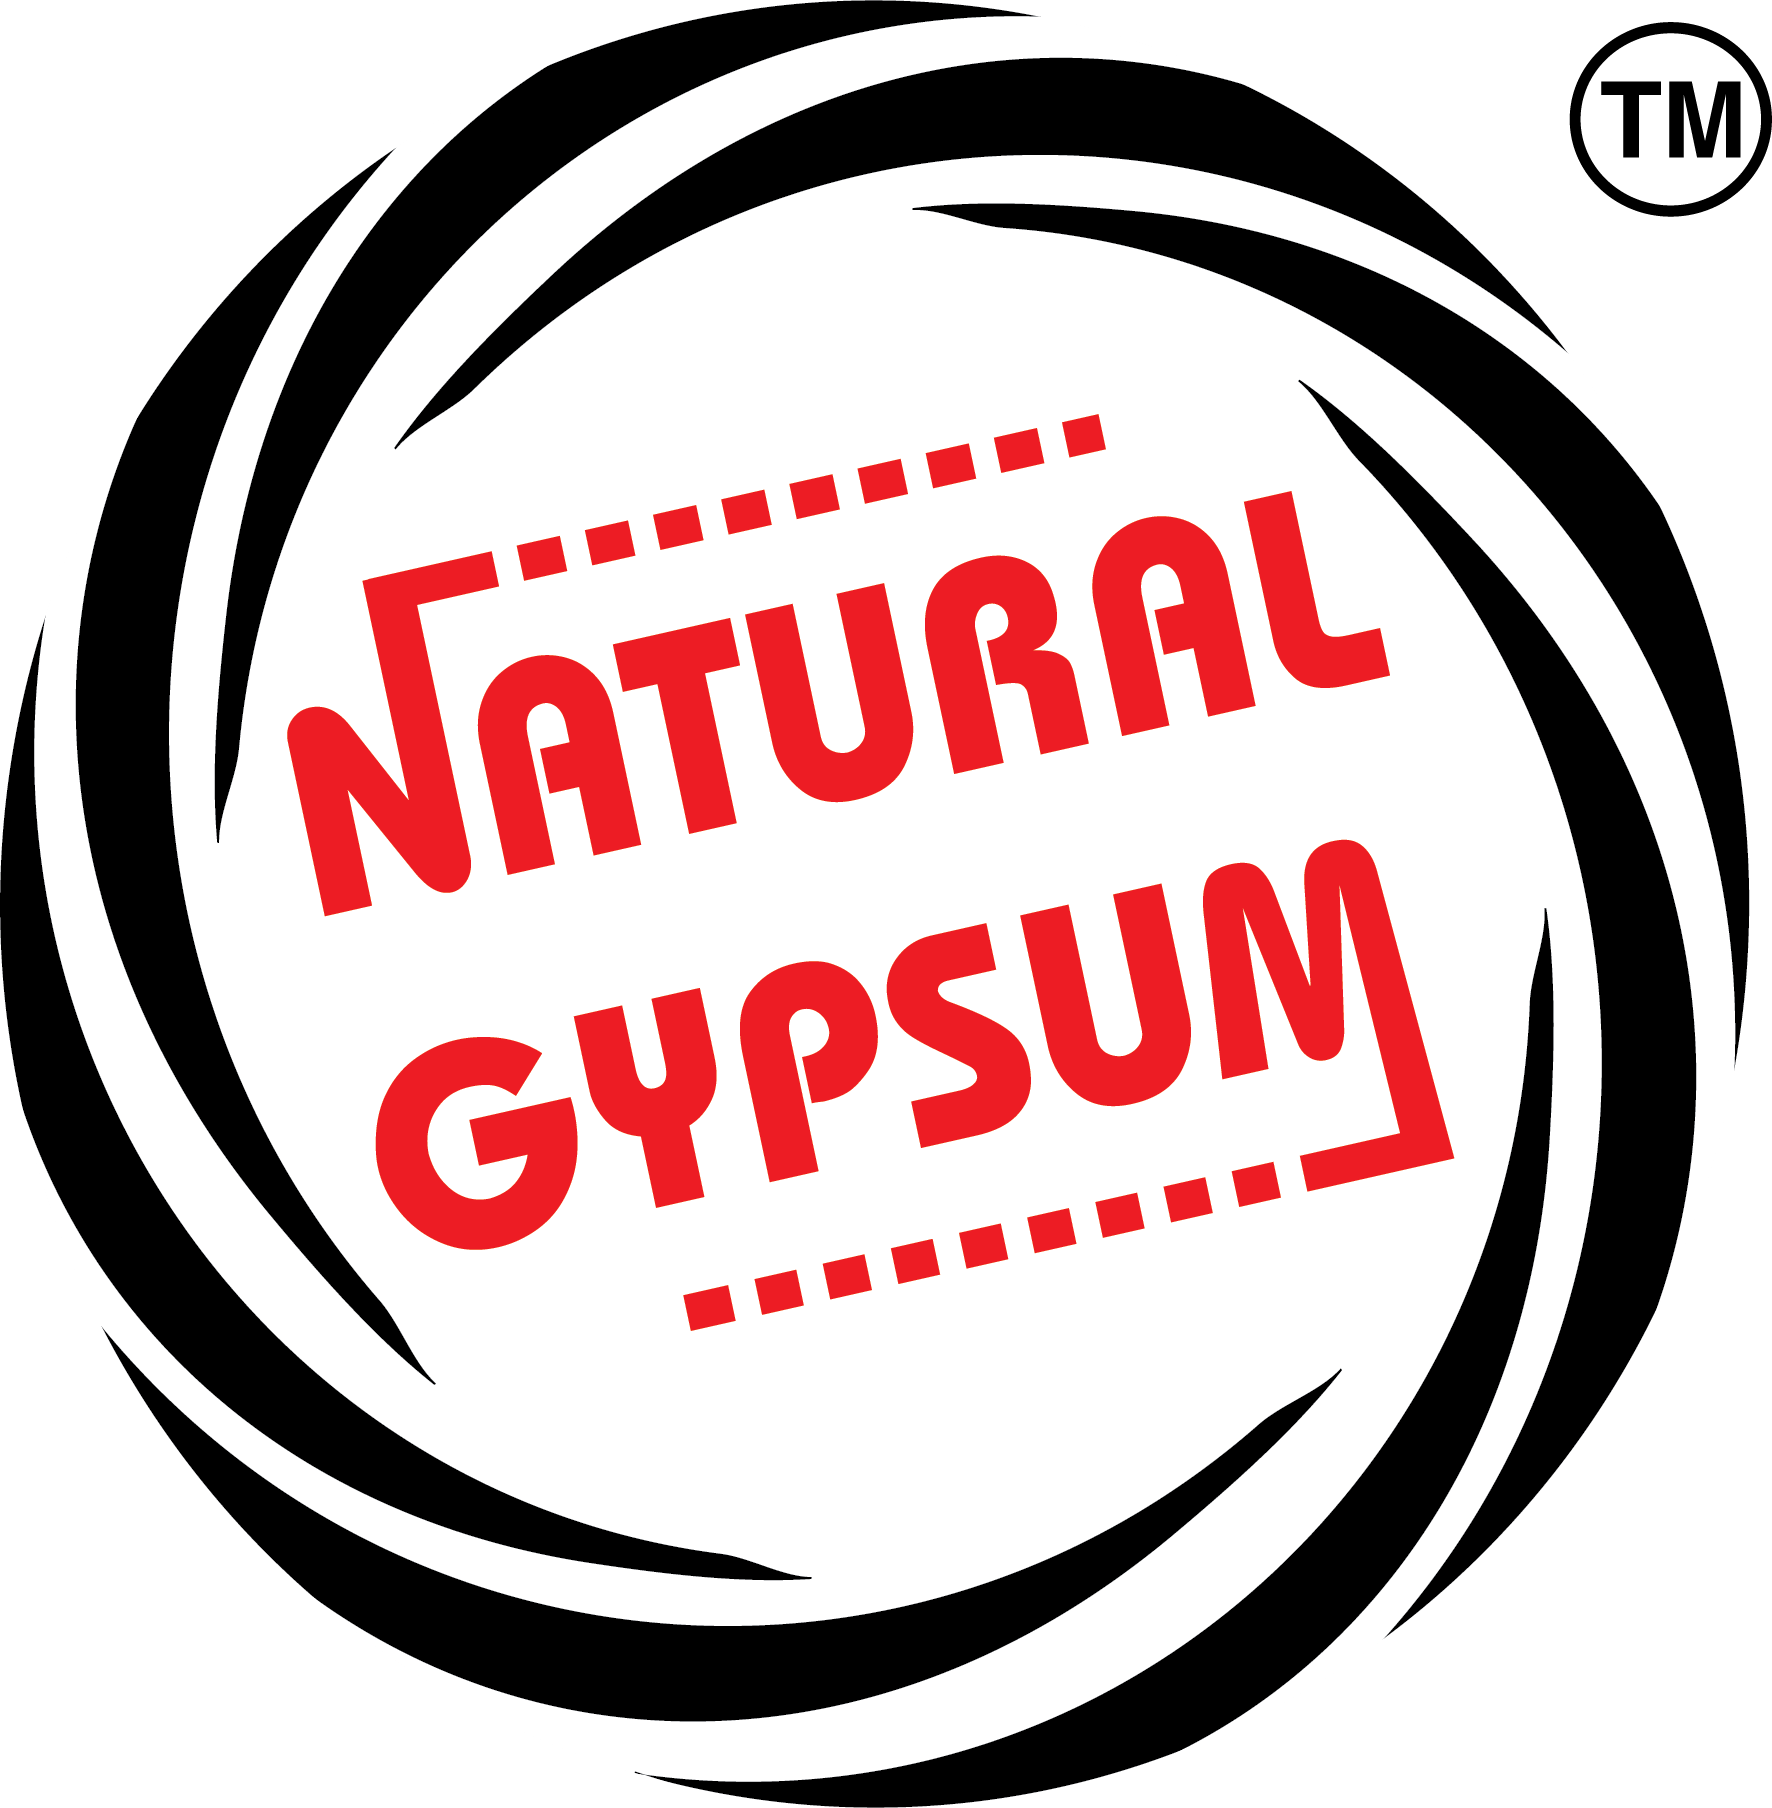 New Natural Gypsum logo-01_Compressed